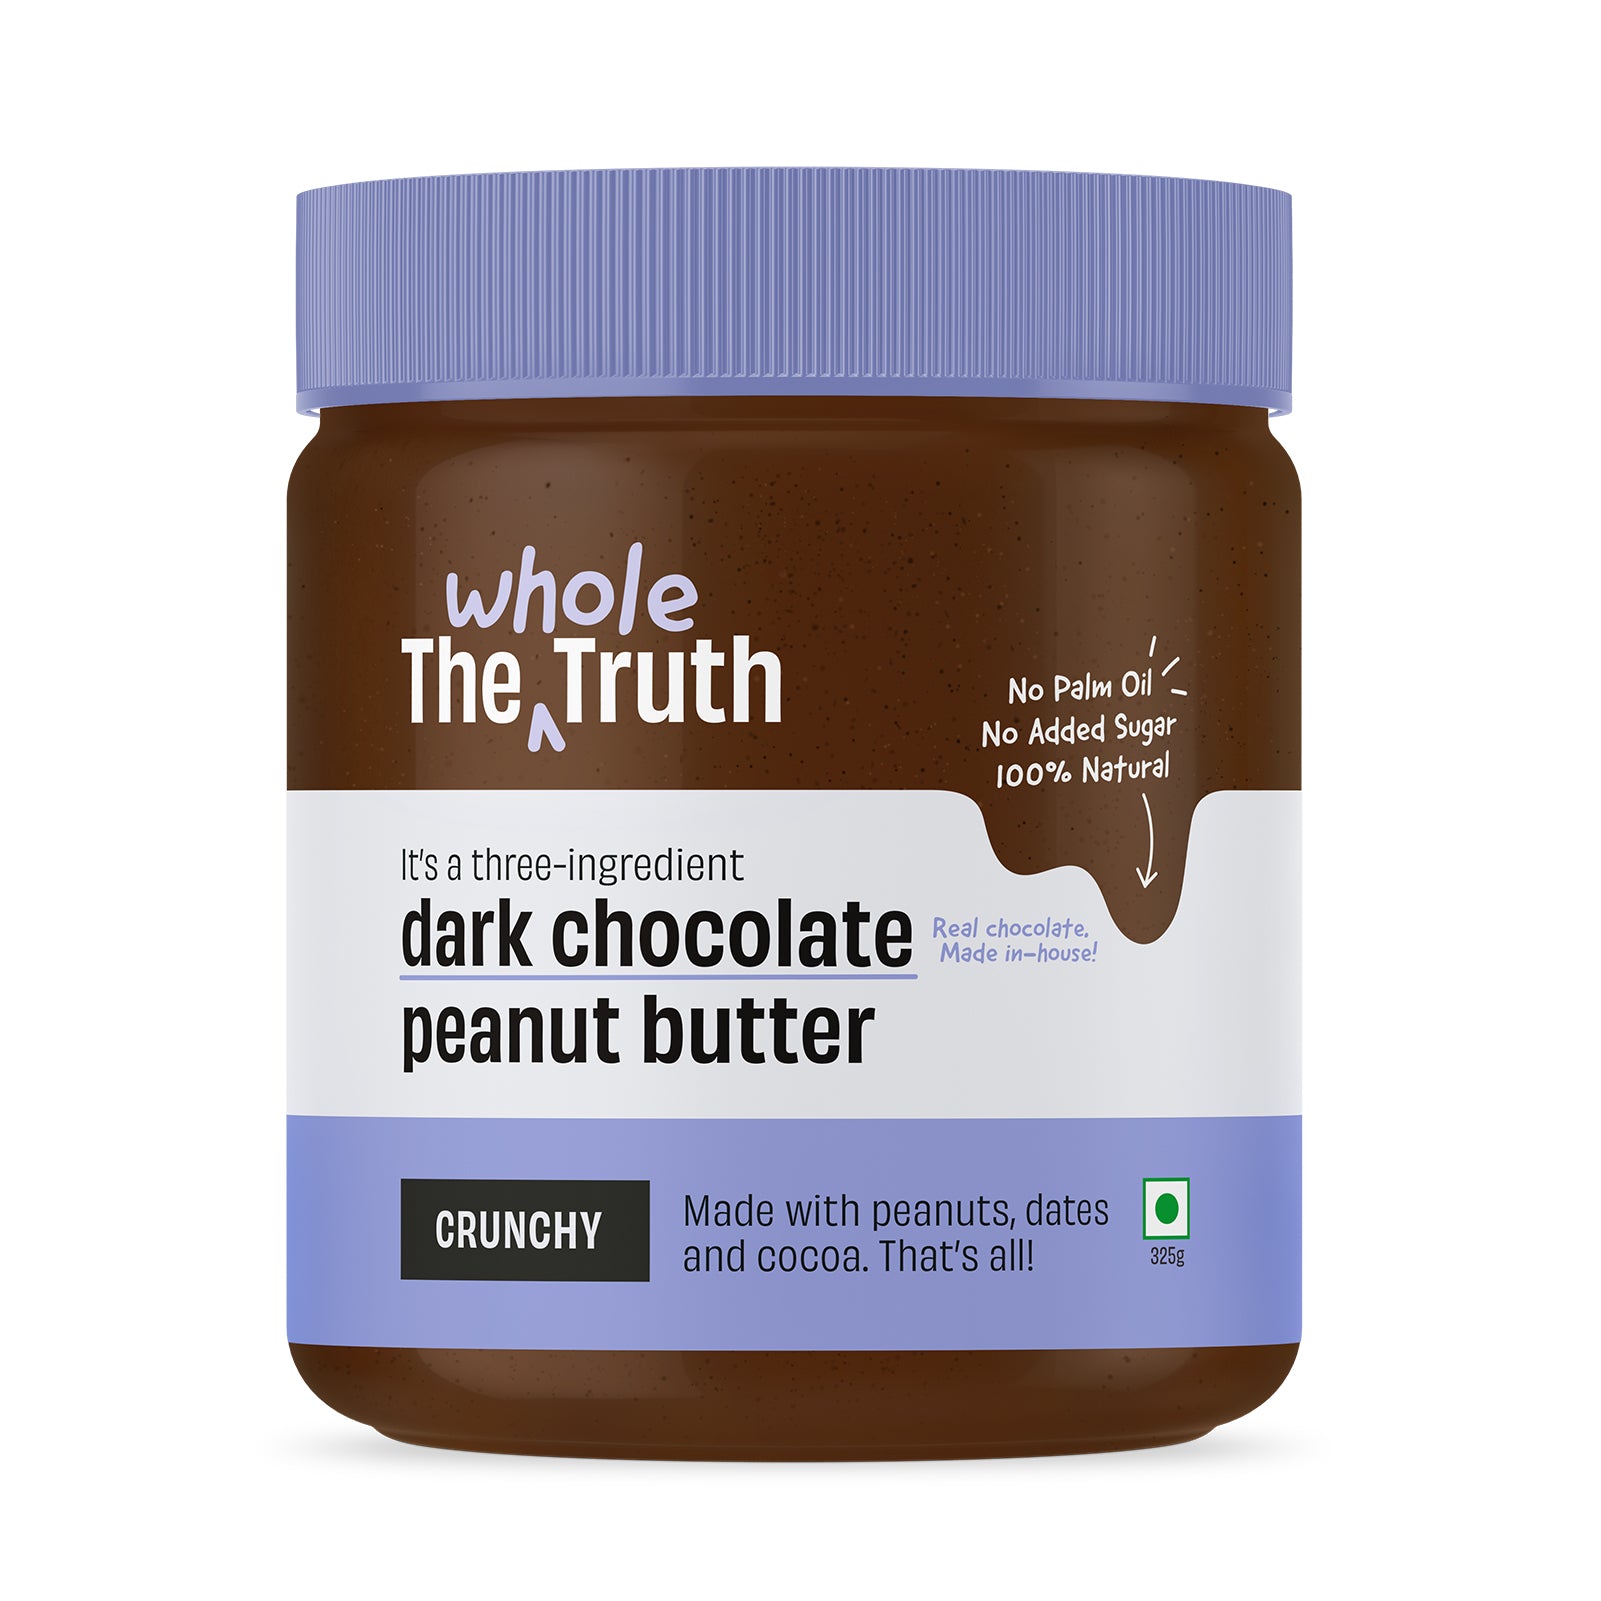 The Whole Truth - Dark Chocolate Peanut Butter - Crunchy | All Natural | Gluten Free | Vegan